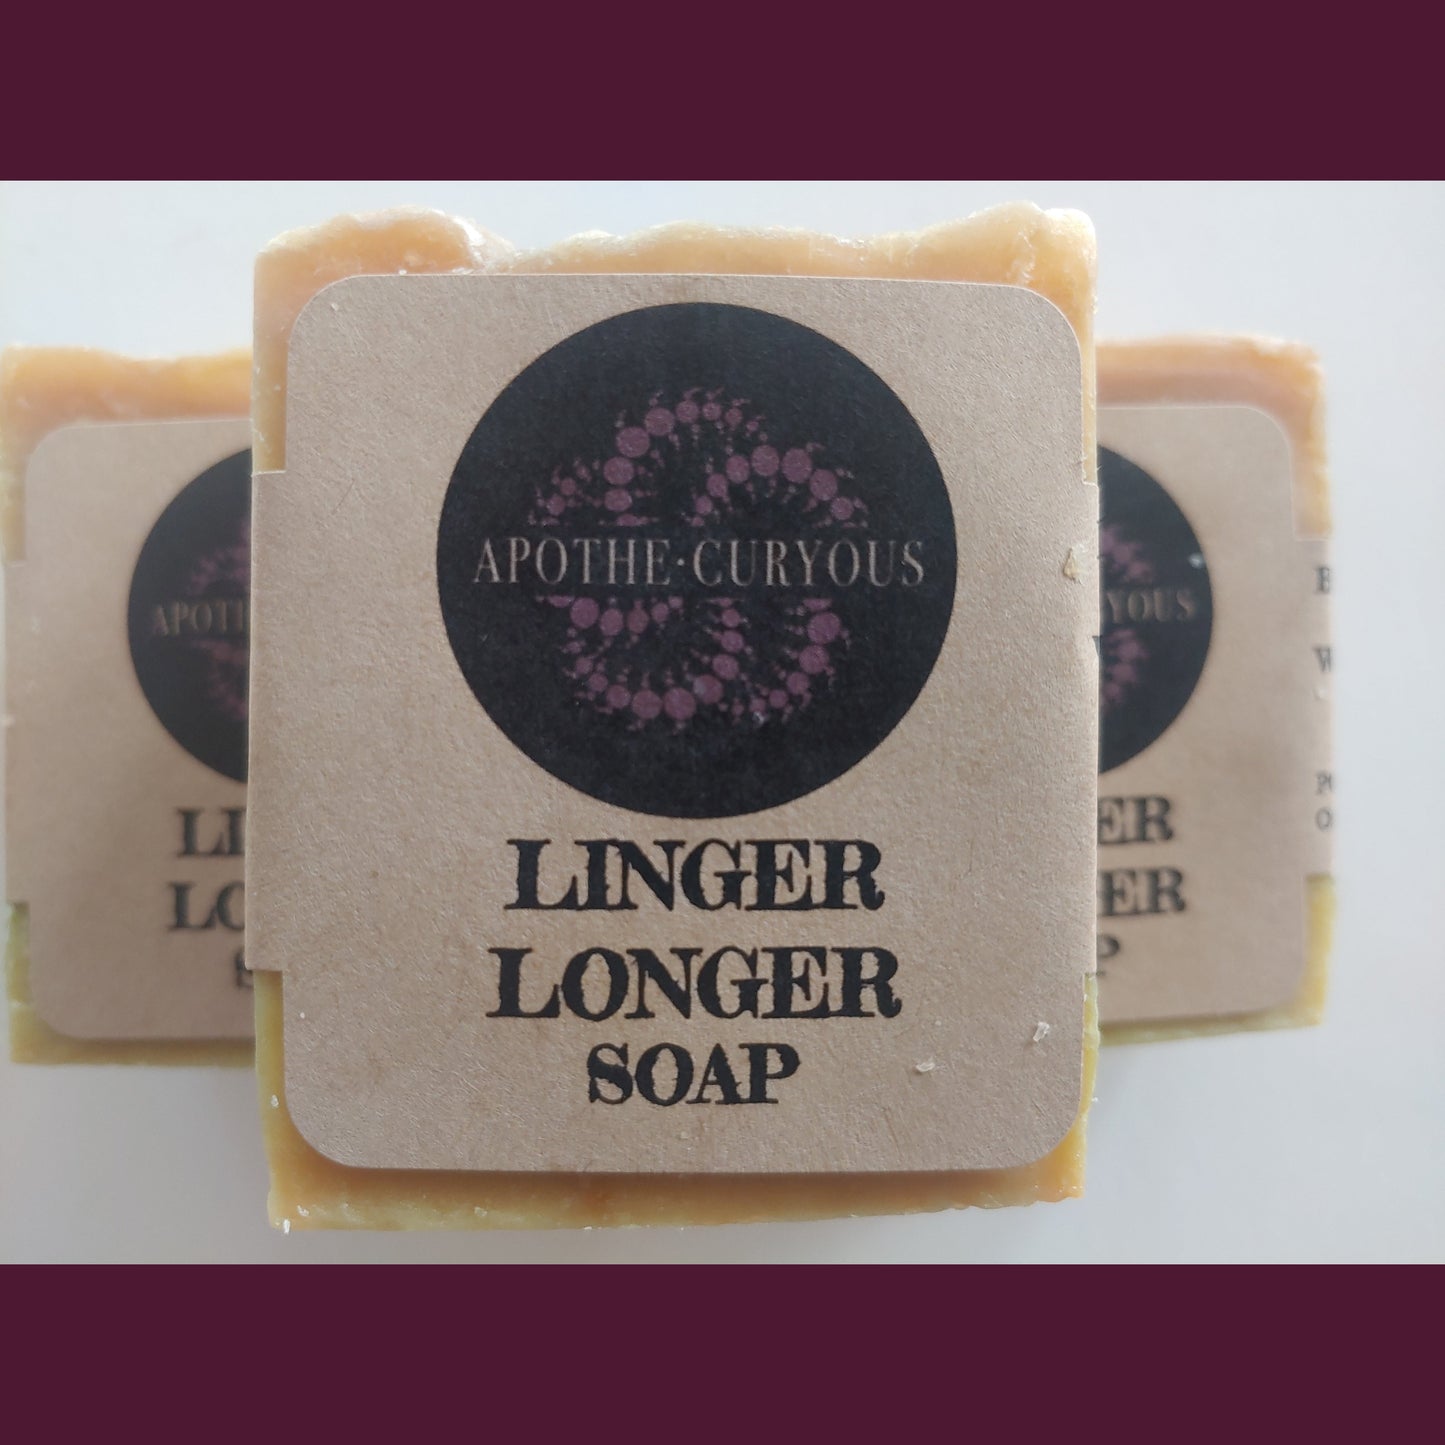 Linger Longer Vegan soap, Apothecuryous, Lime, Lemongrass and Ginger scent